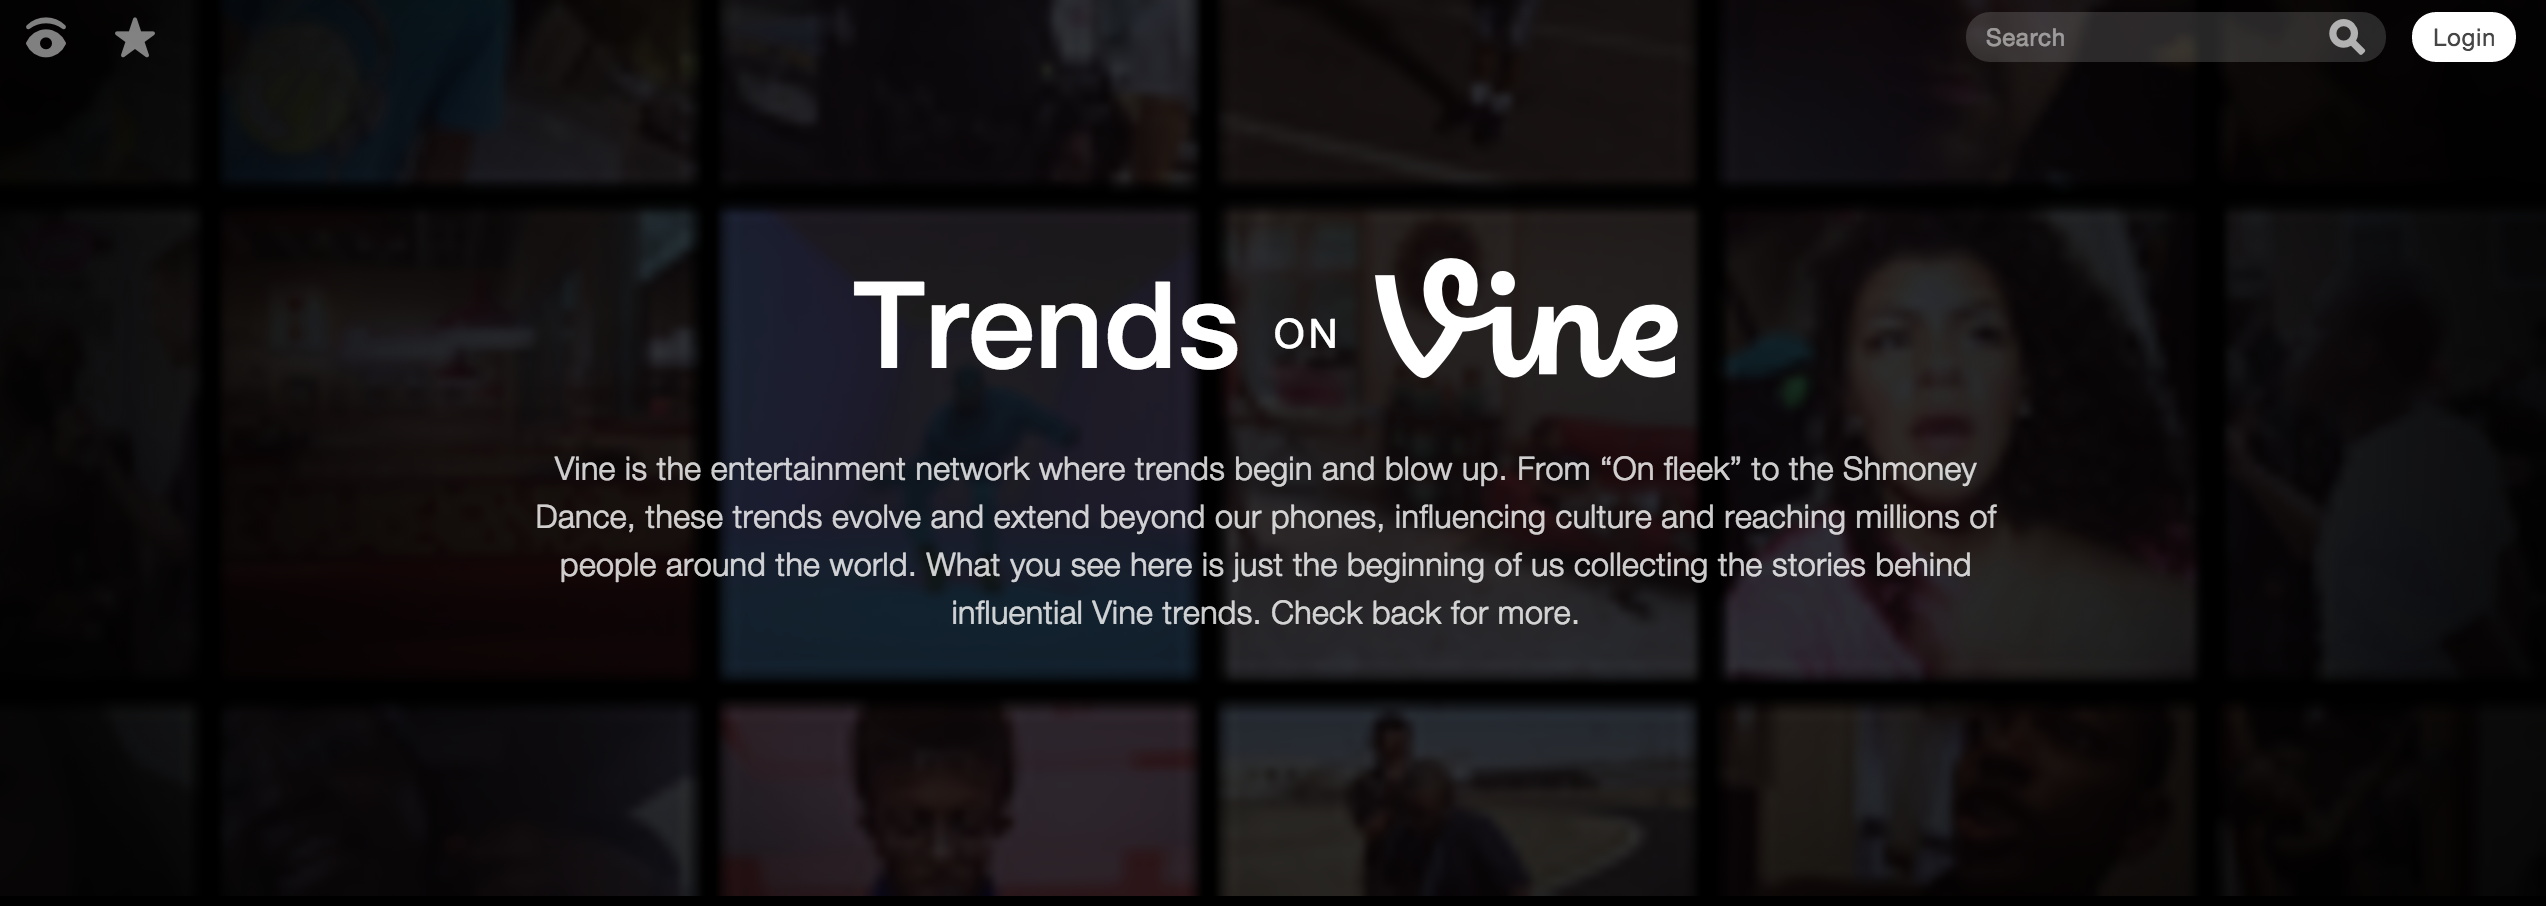 vine trends